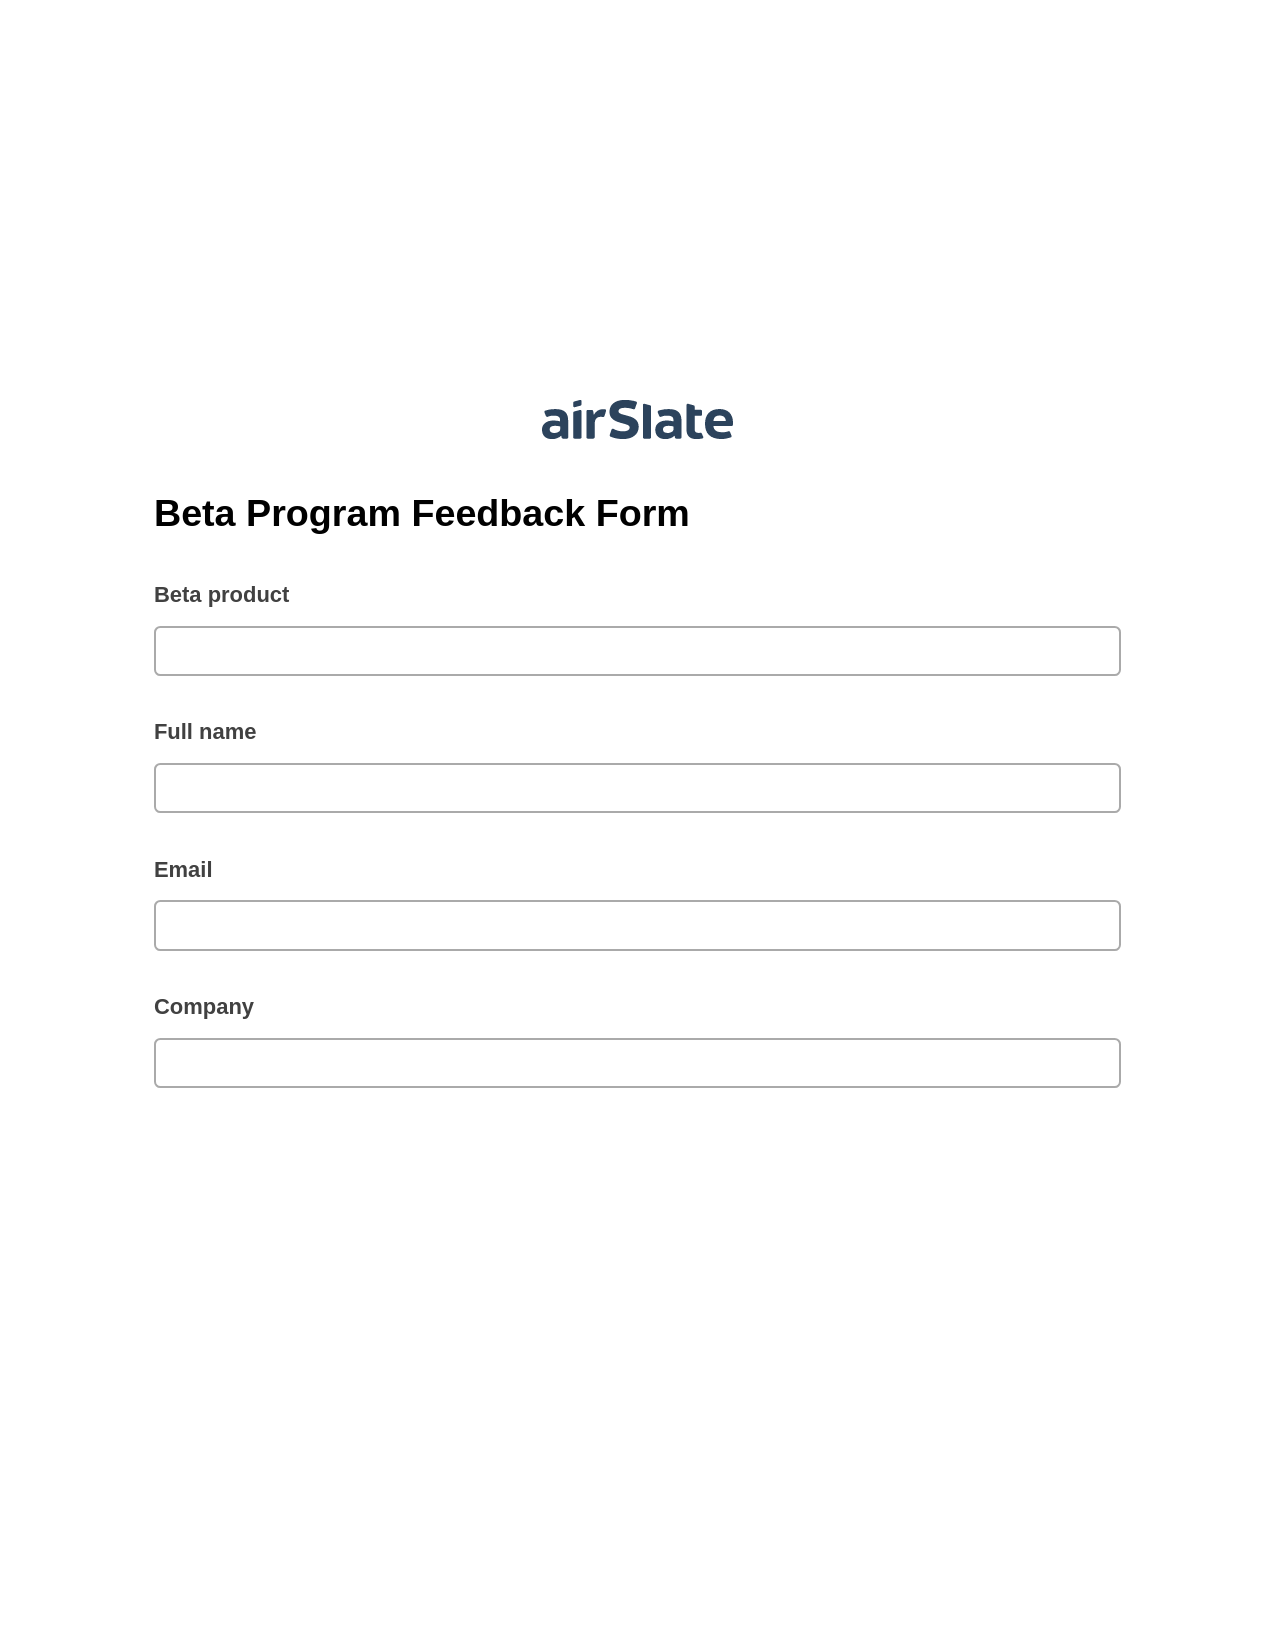 Beta Program Feedback Form Pre-fill from Excel Spreadsheet Bot, Set Signature Type Bot, Post-finish Document Bot